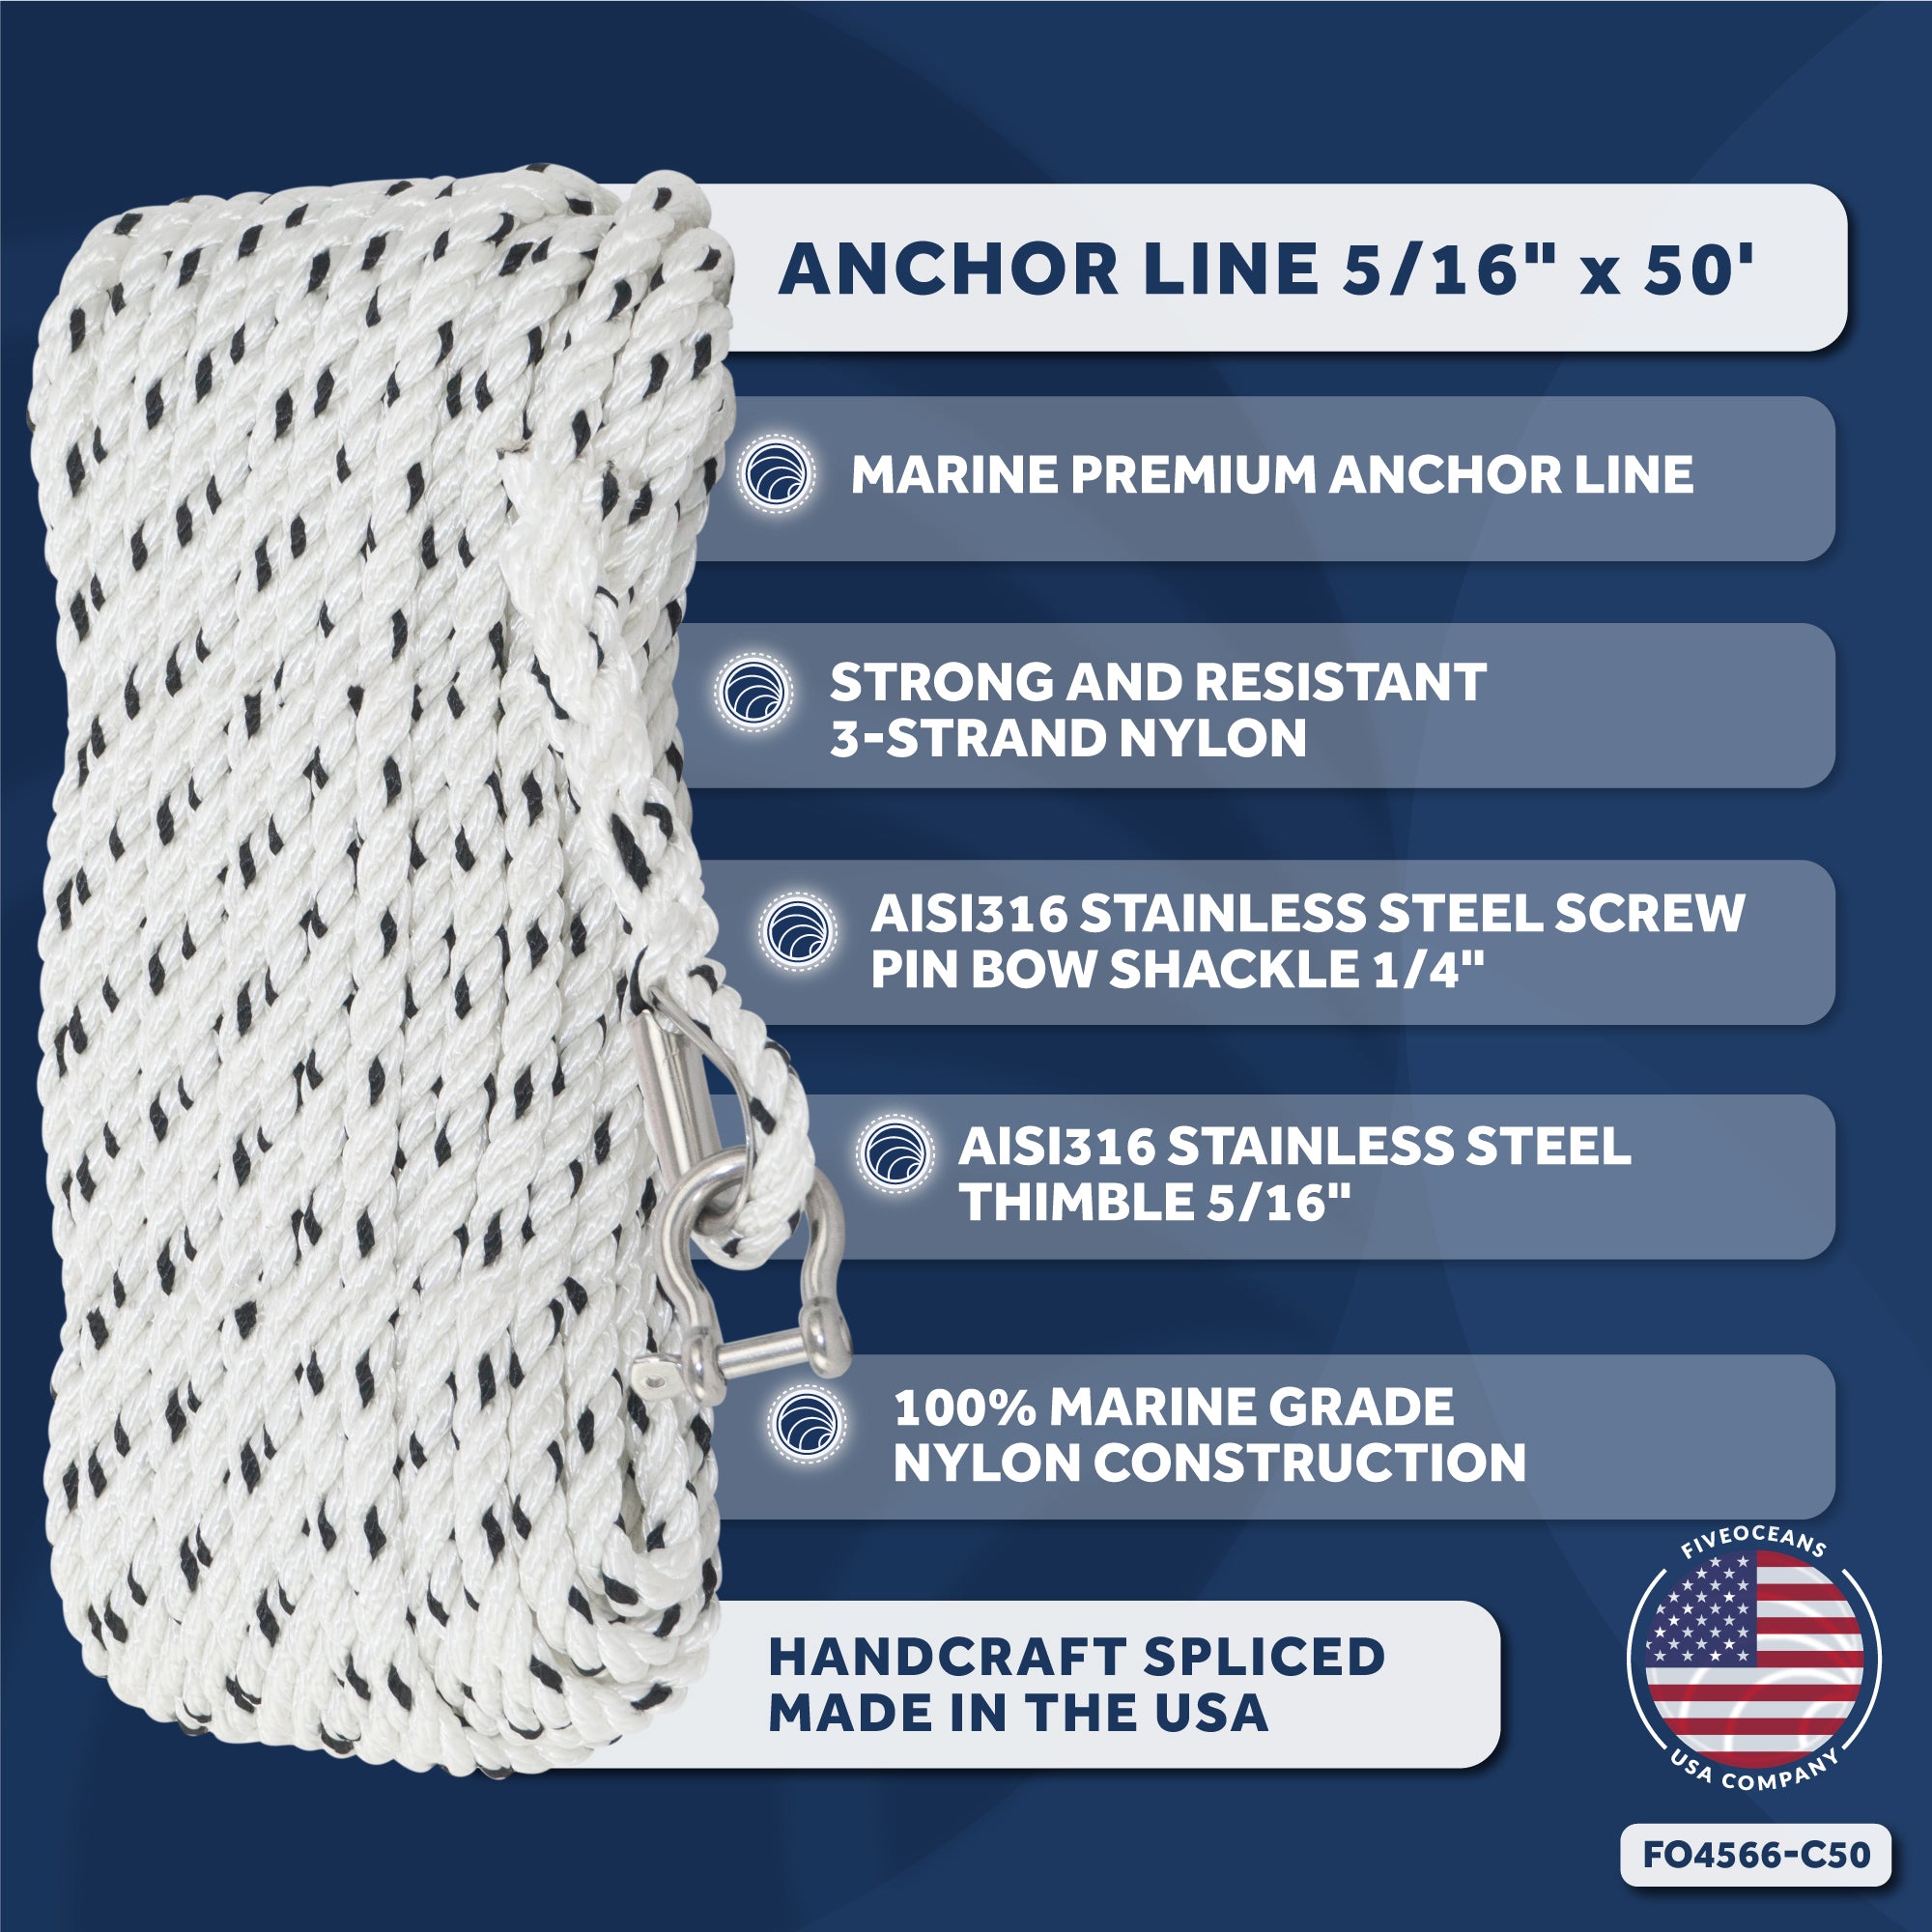 Anchor Line 5/16" x 50', 3-Strand Nylon, Spliced - FO4566-C50